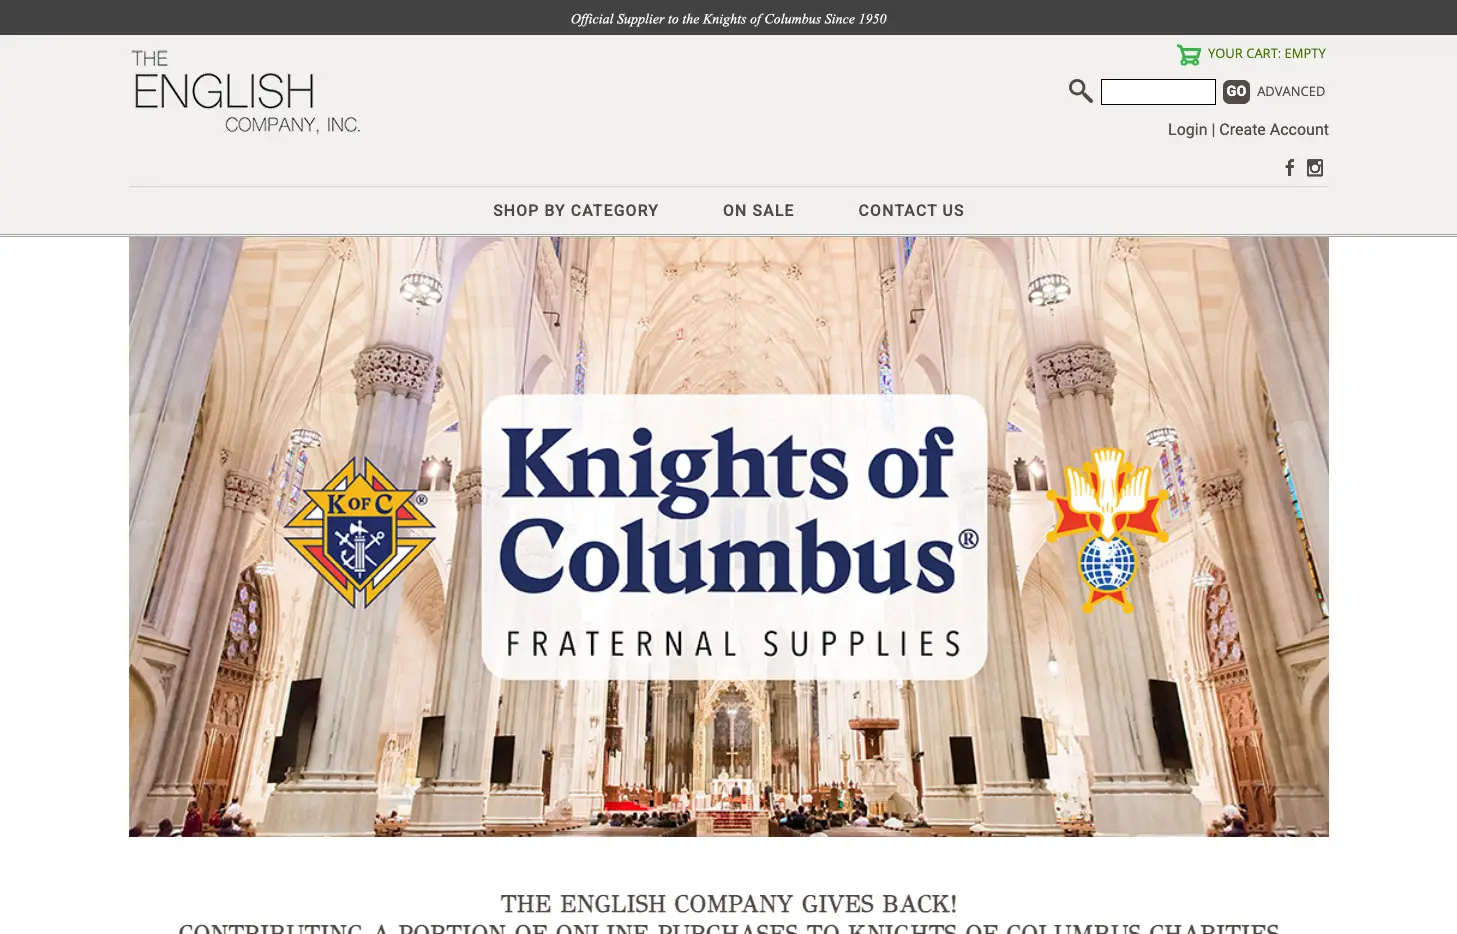 The English Company, Inc. - Knights of Columbus Supplies